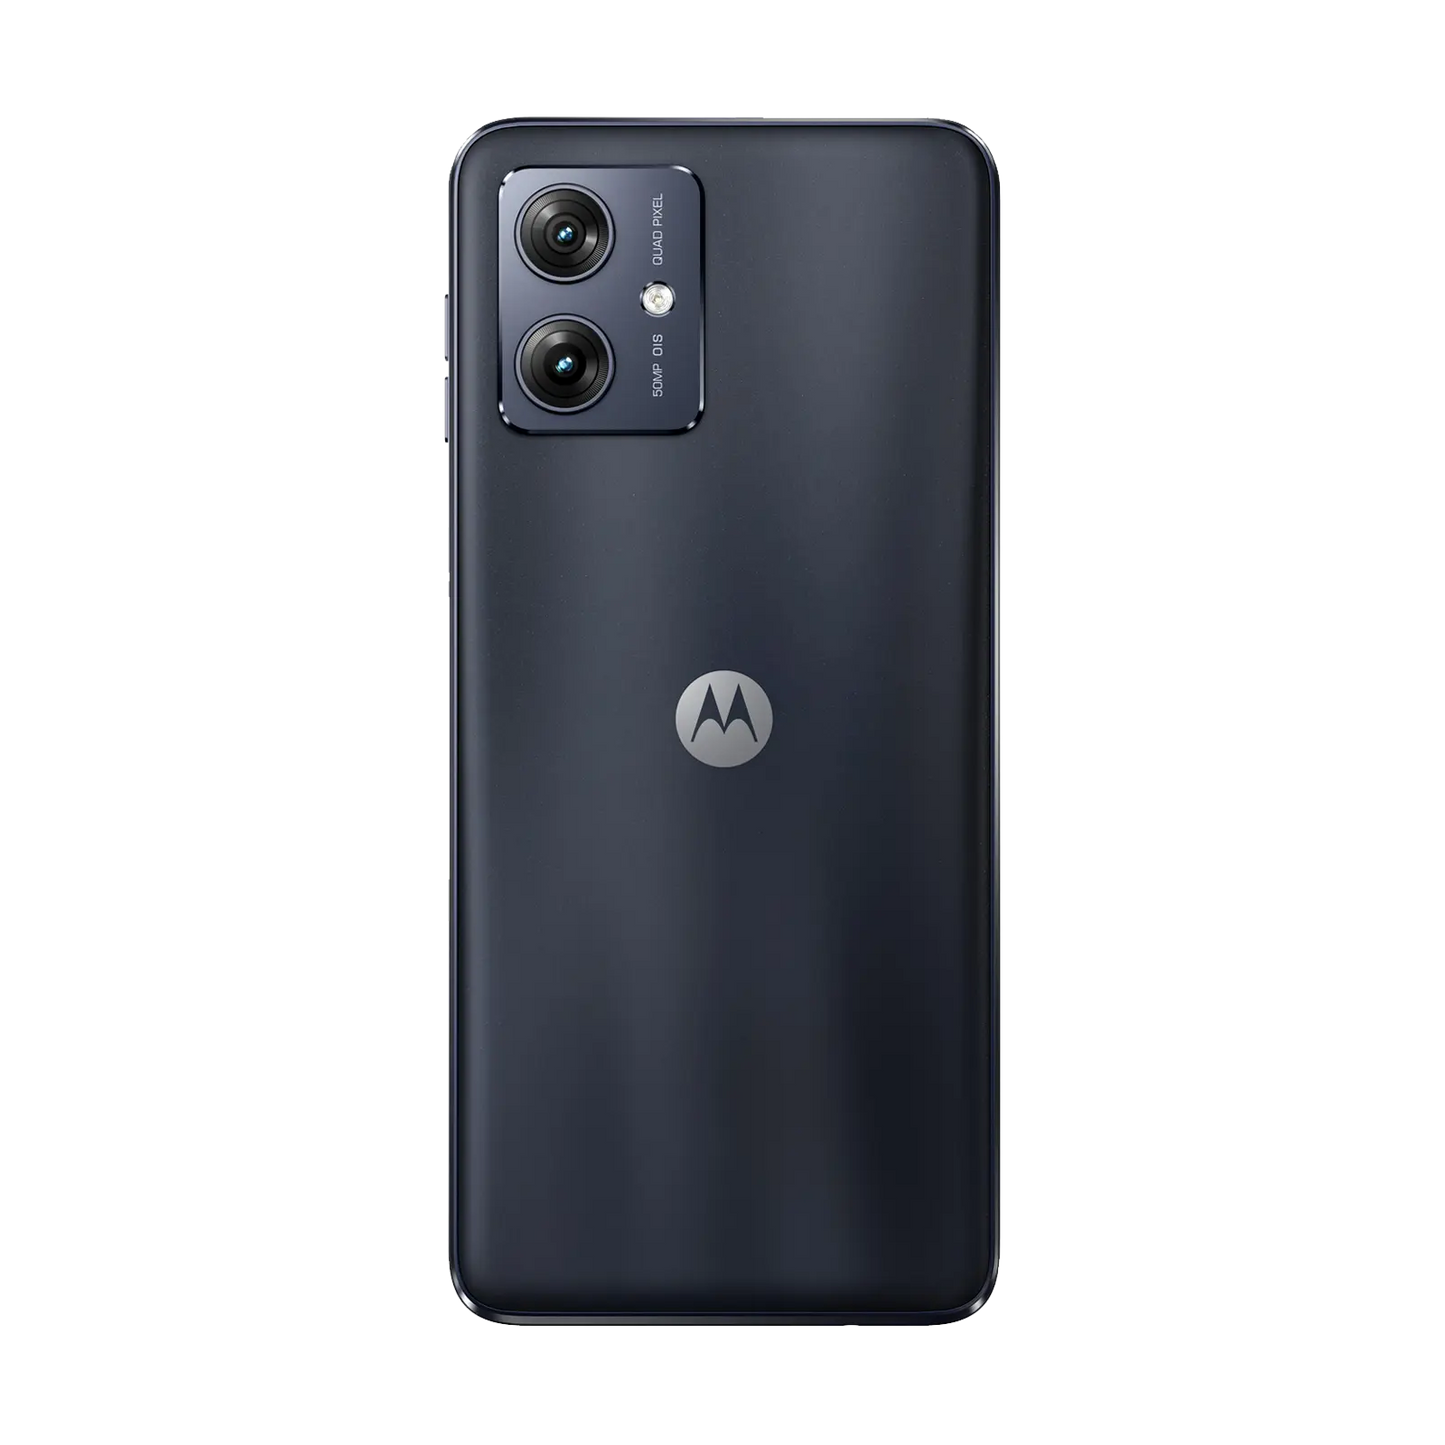 Motorola Moto G54 5G Power Edition od Motorola w SimplyBuy.pl